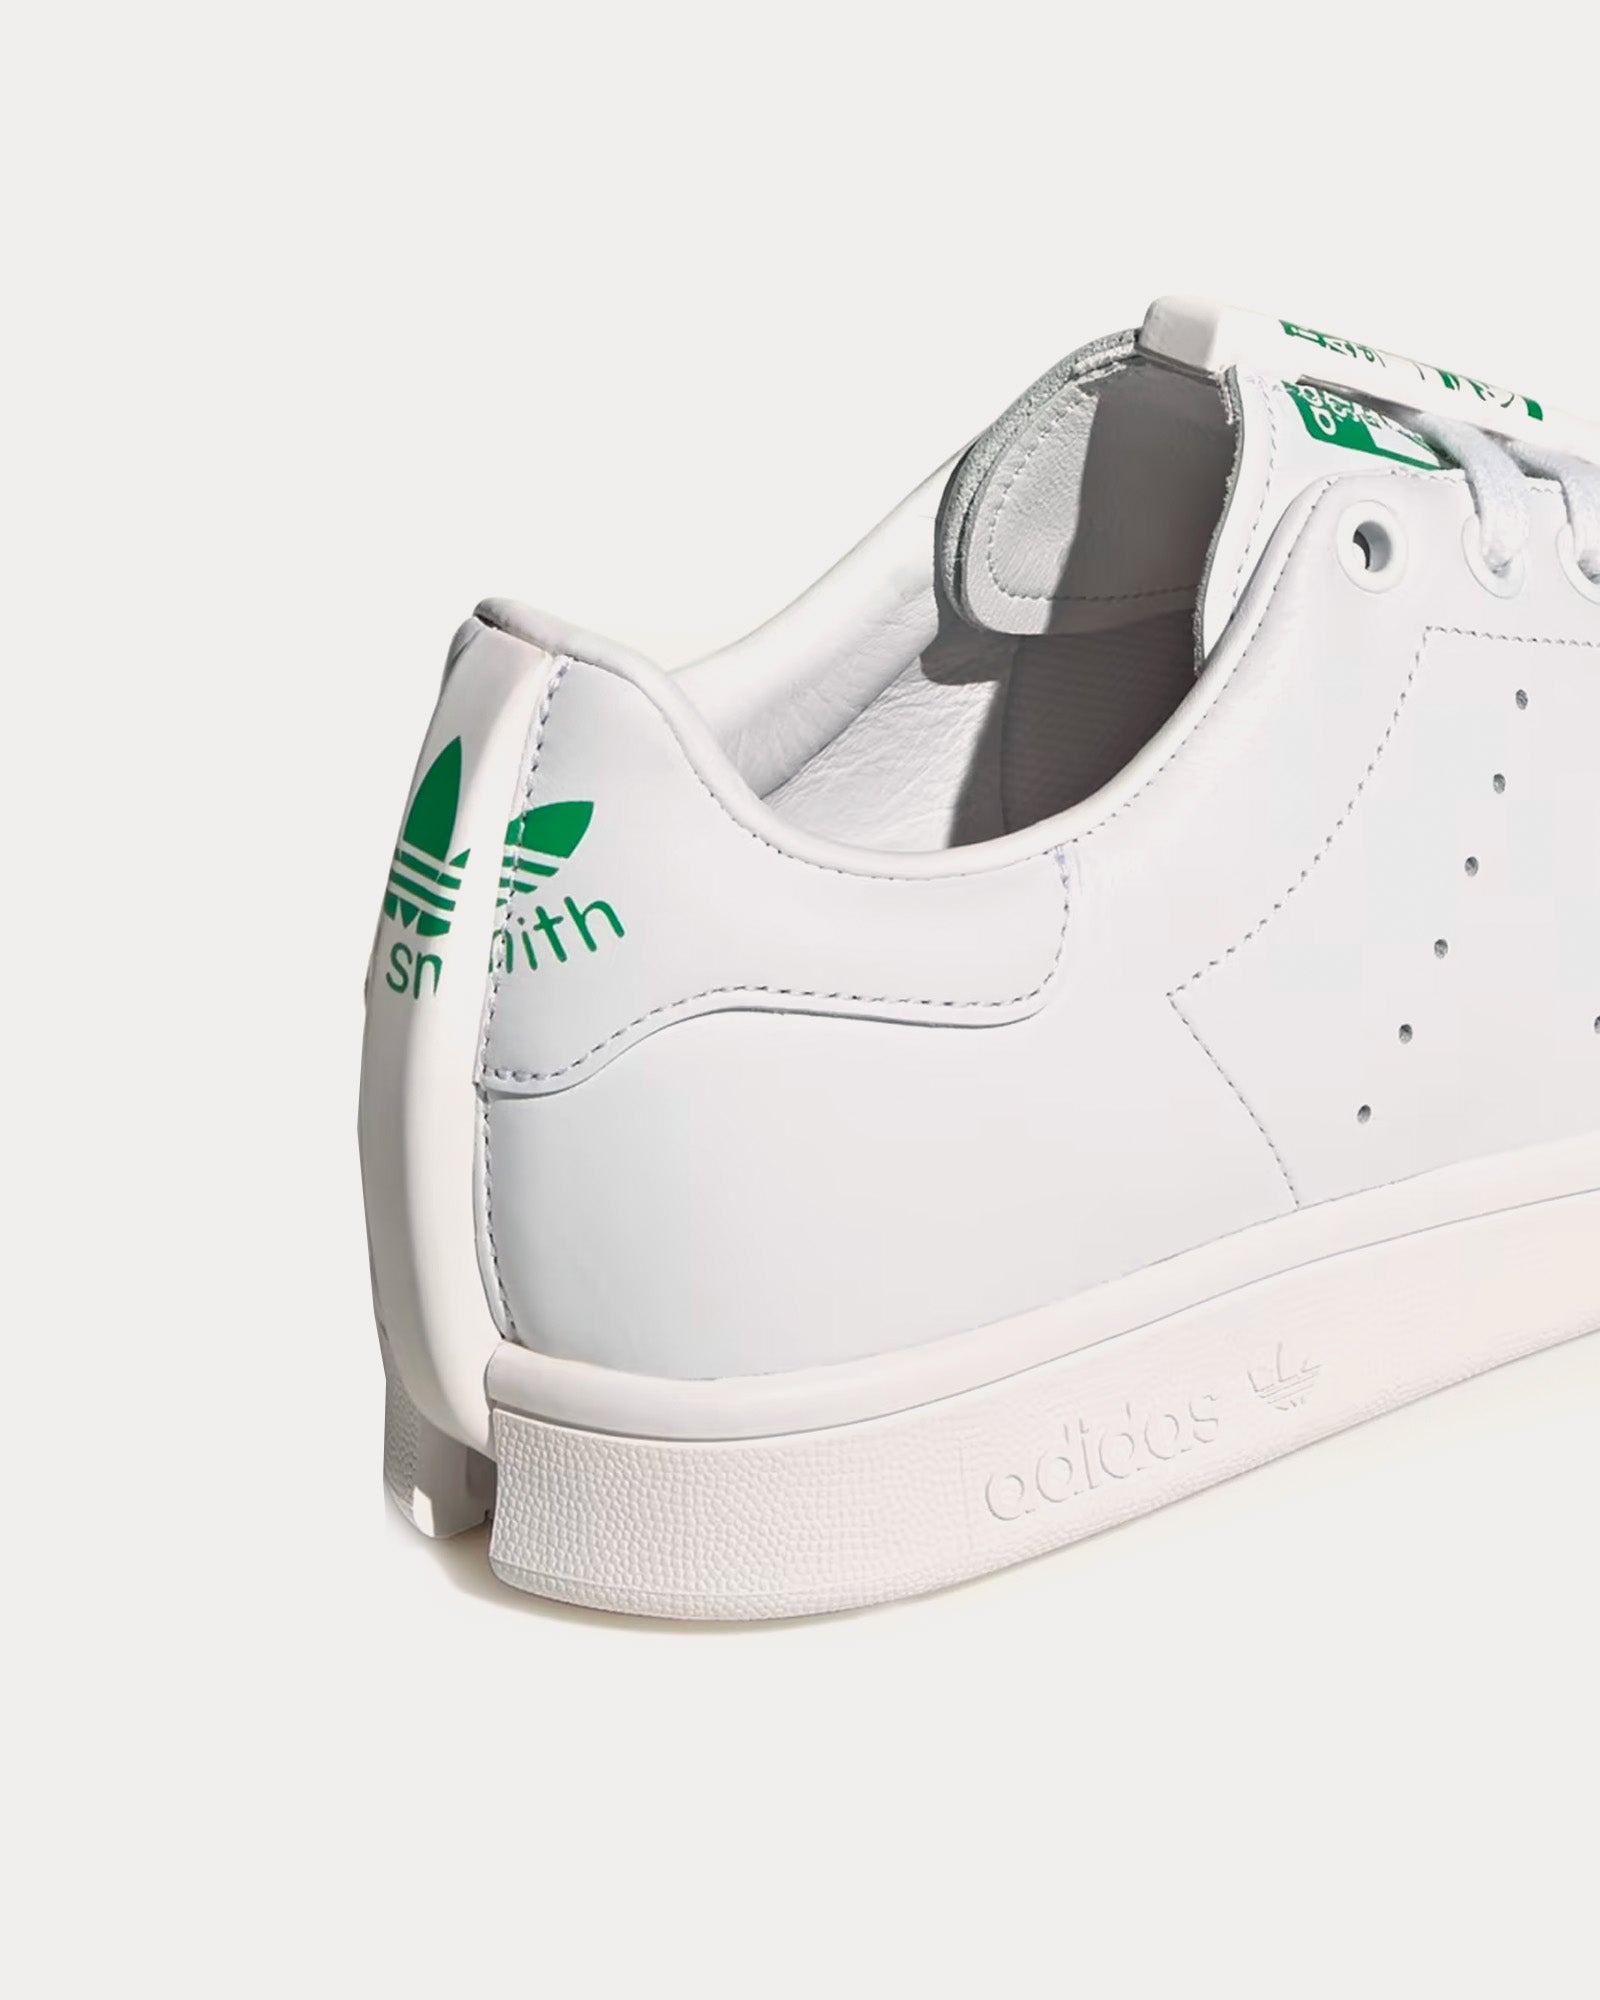 Adidas x Craig Green - Split Stan Smith Core White / Core White / Core Black Low Top Sneakers